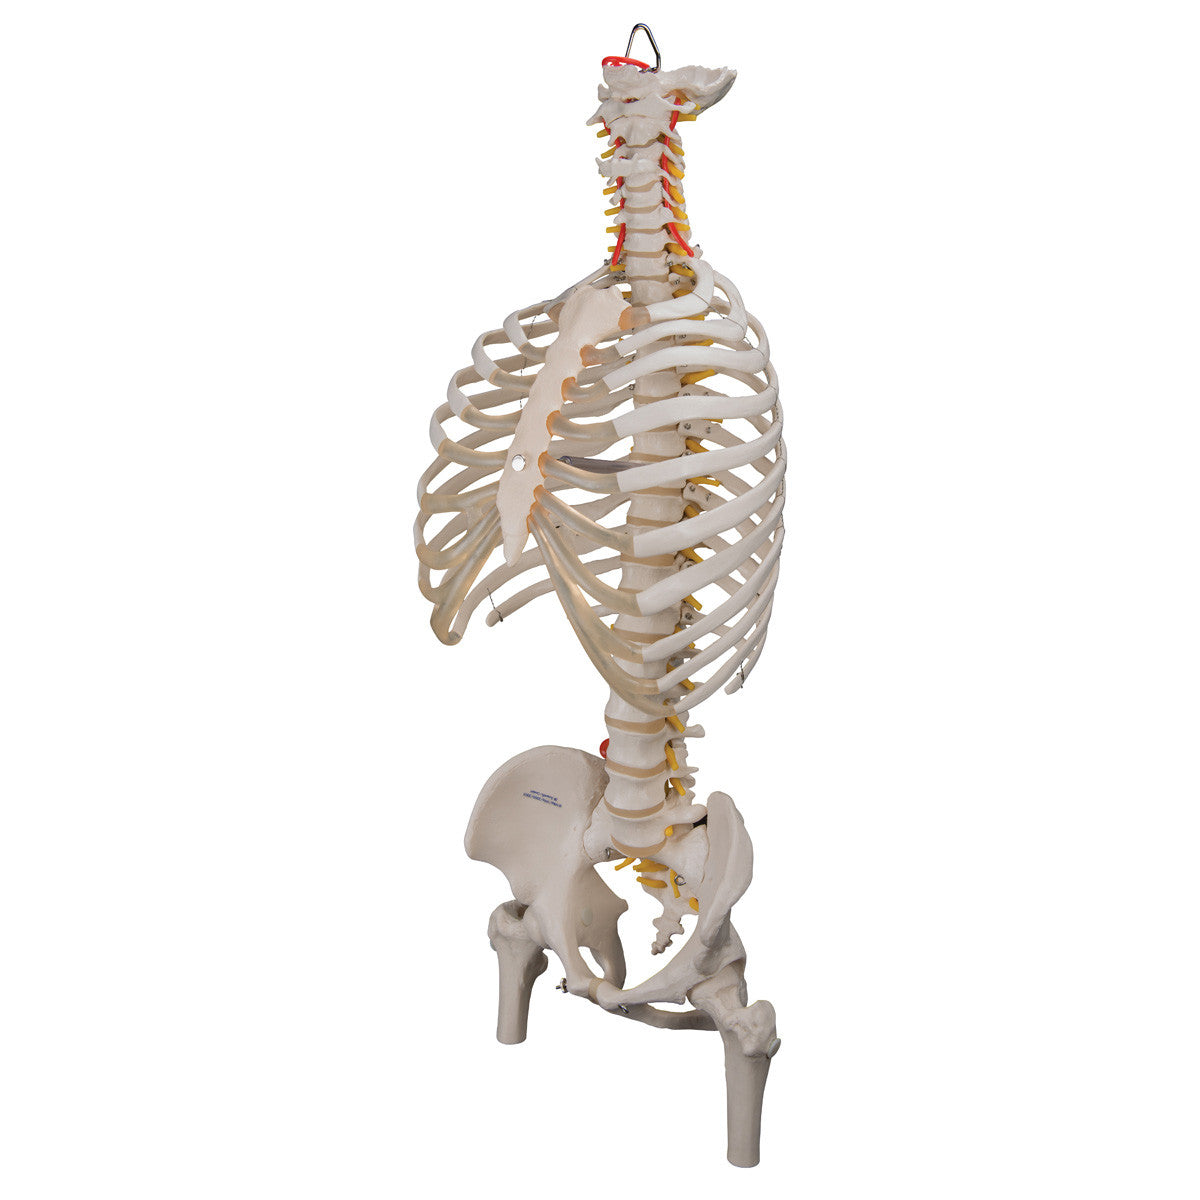 a56-2_03_1200_1200_classic-flexible-human-spine-model-with-ribs-femur-heads-3b-smart-anatomy__78457.1589753249.1280.1280.jpg